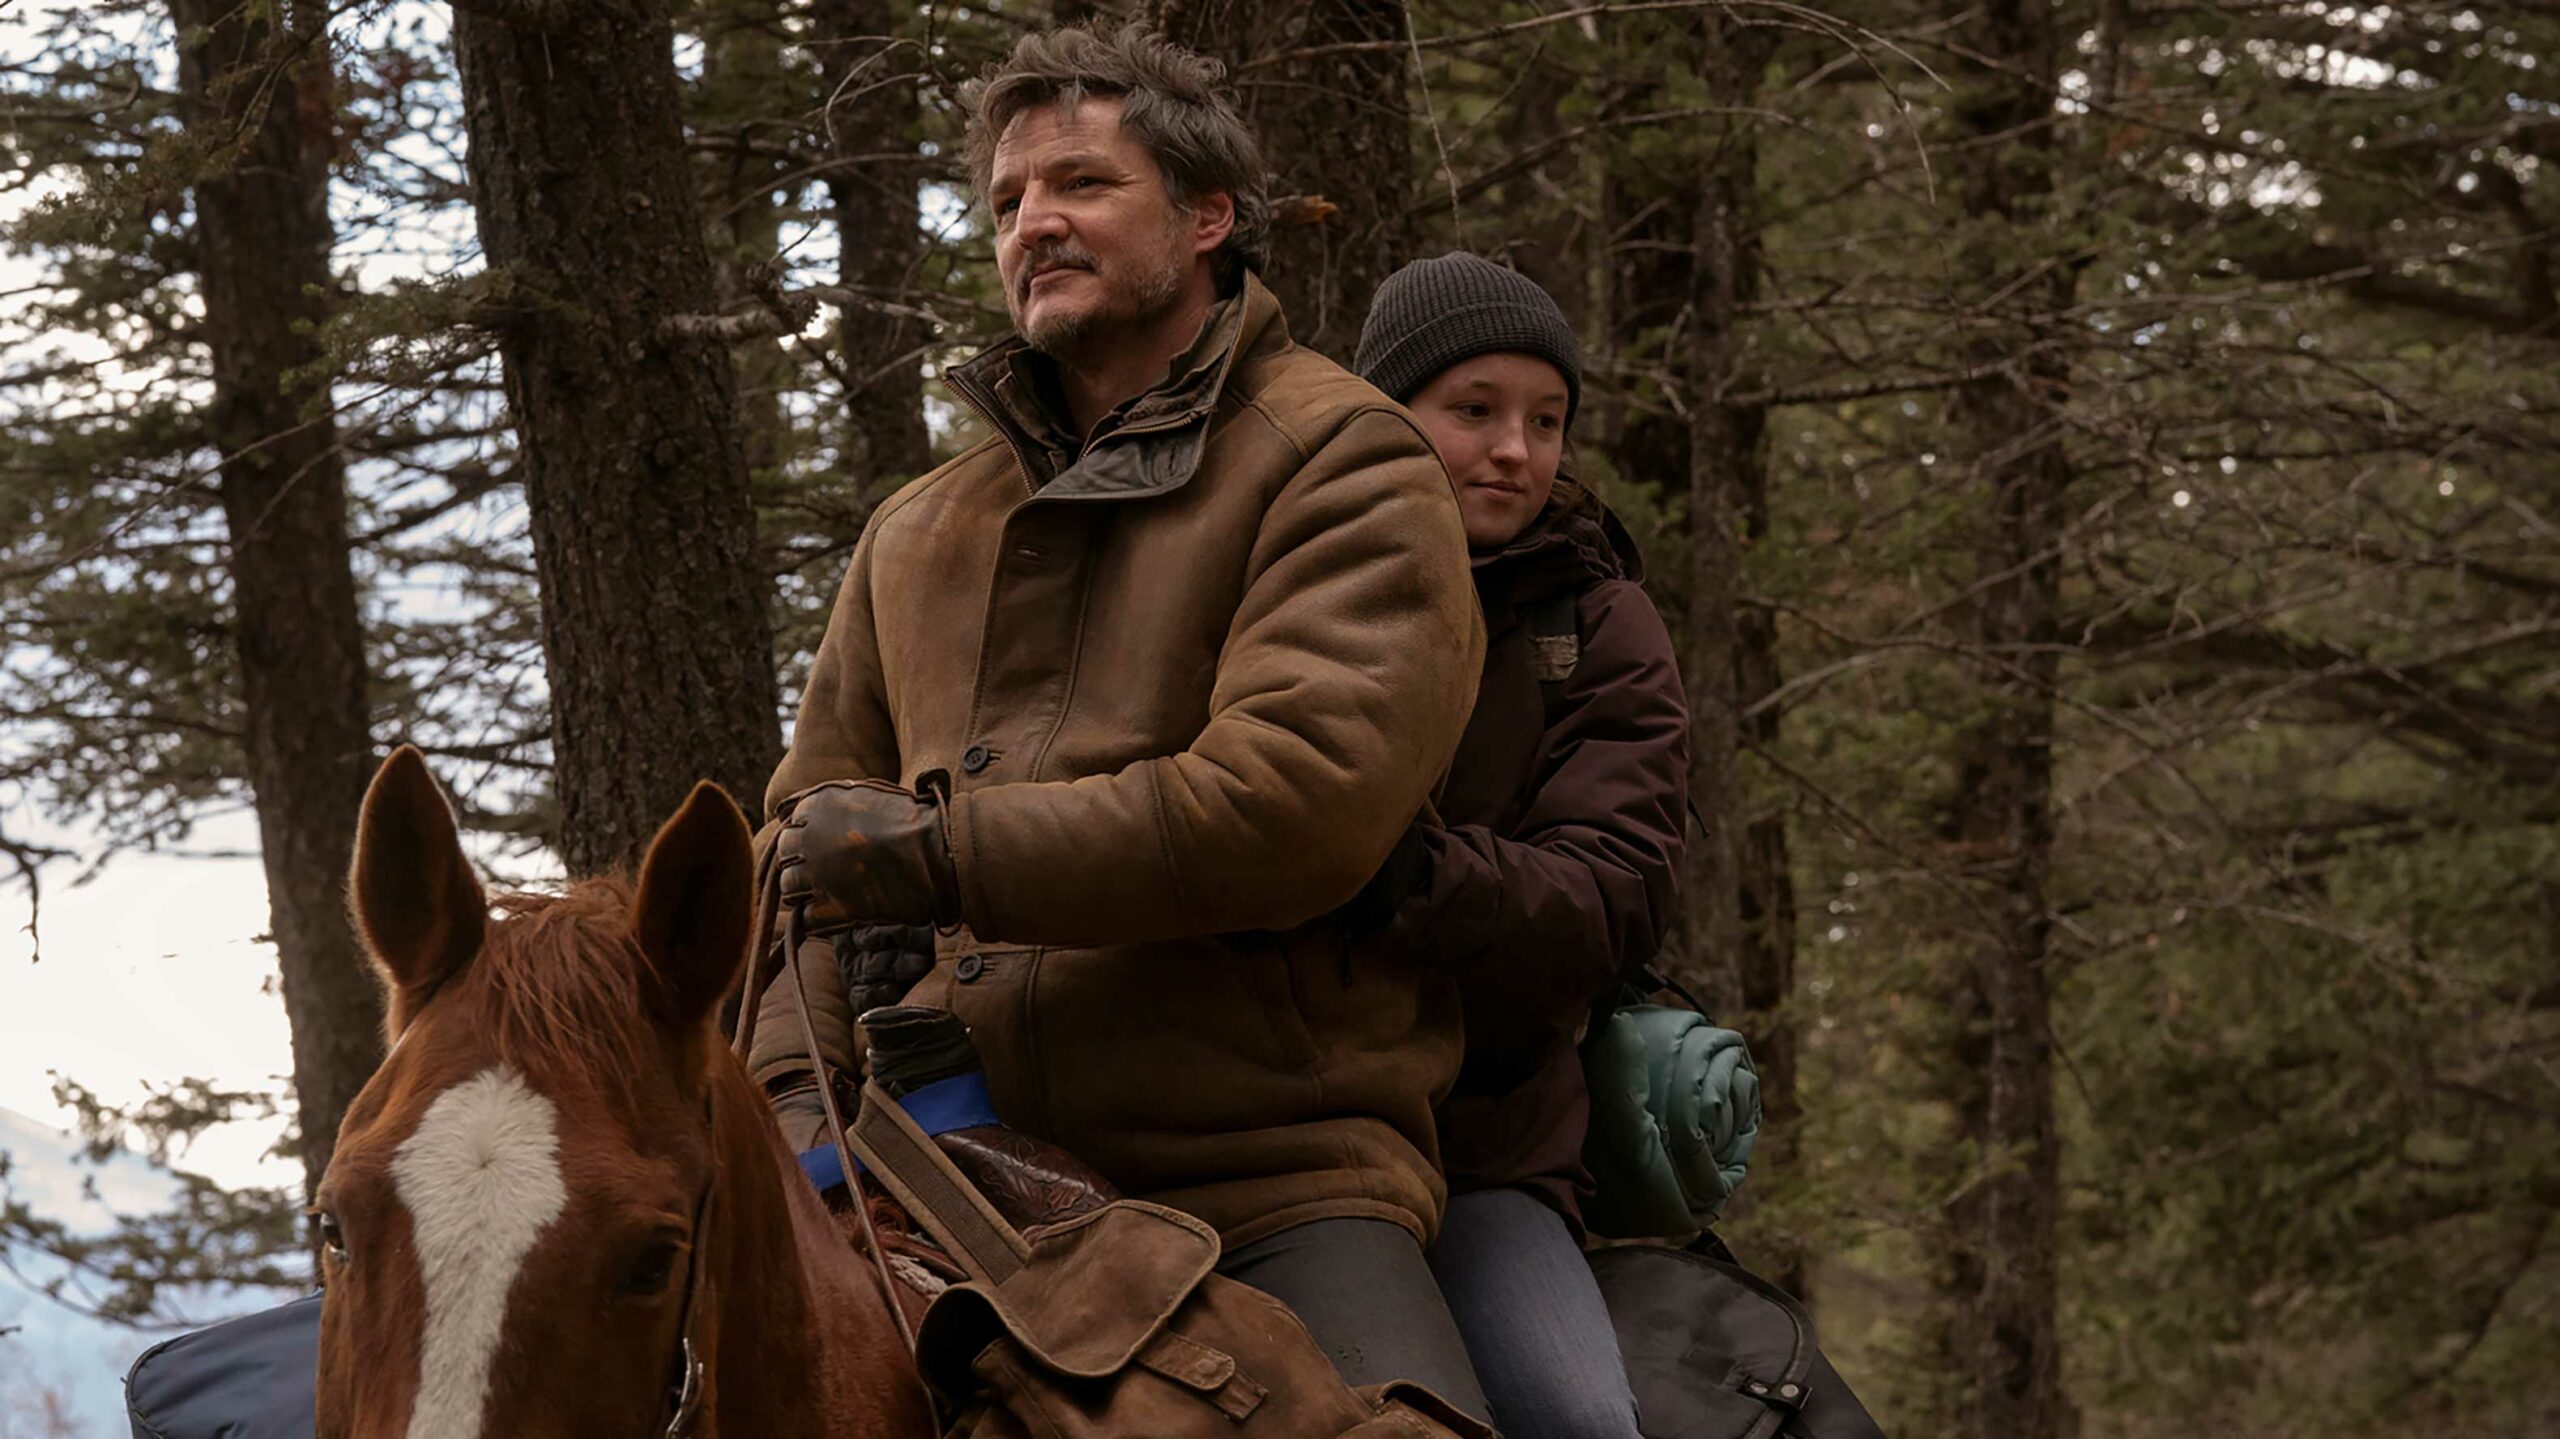 The Last of Us Joel and Ellie on horse